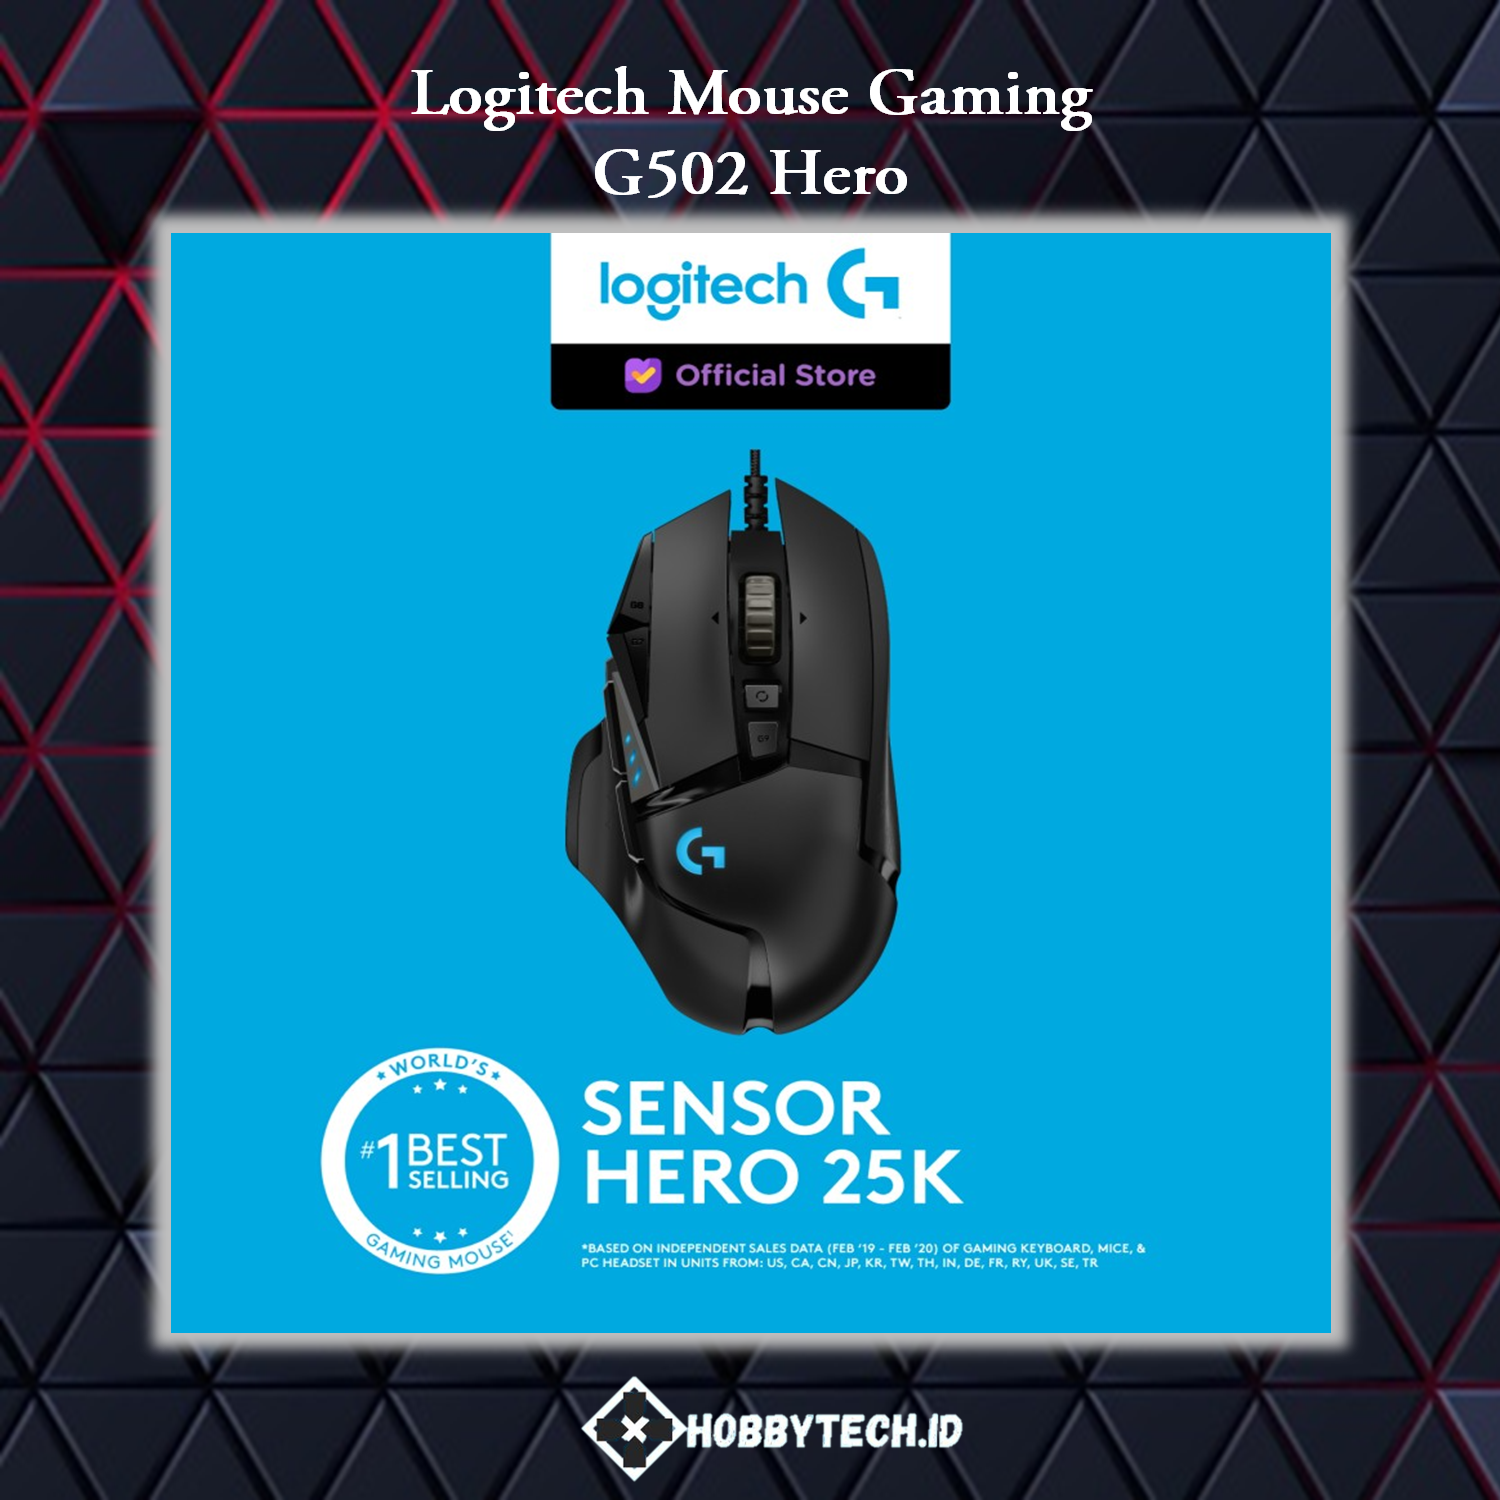 Logitech-G G502 Hero mouse gaming